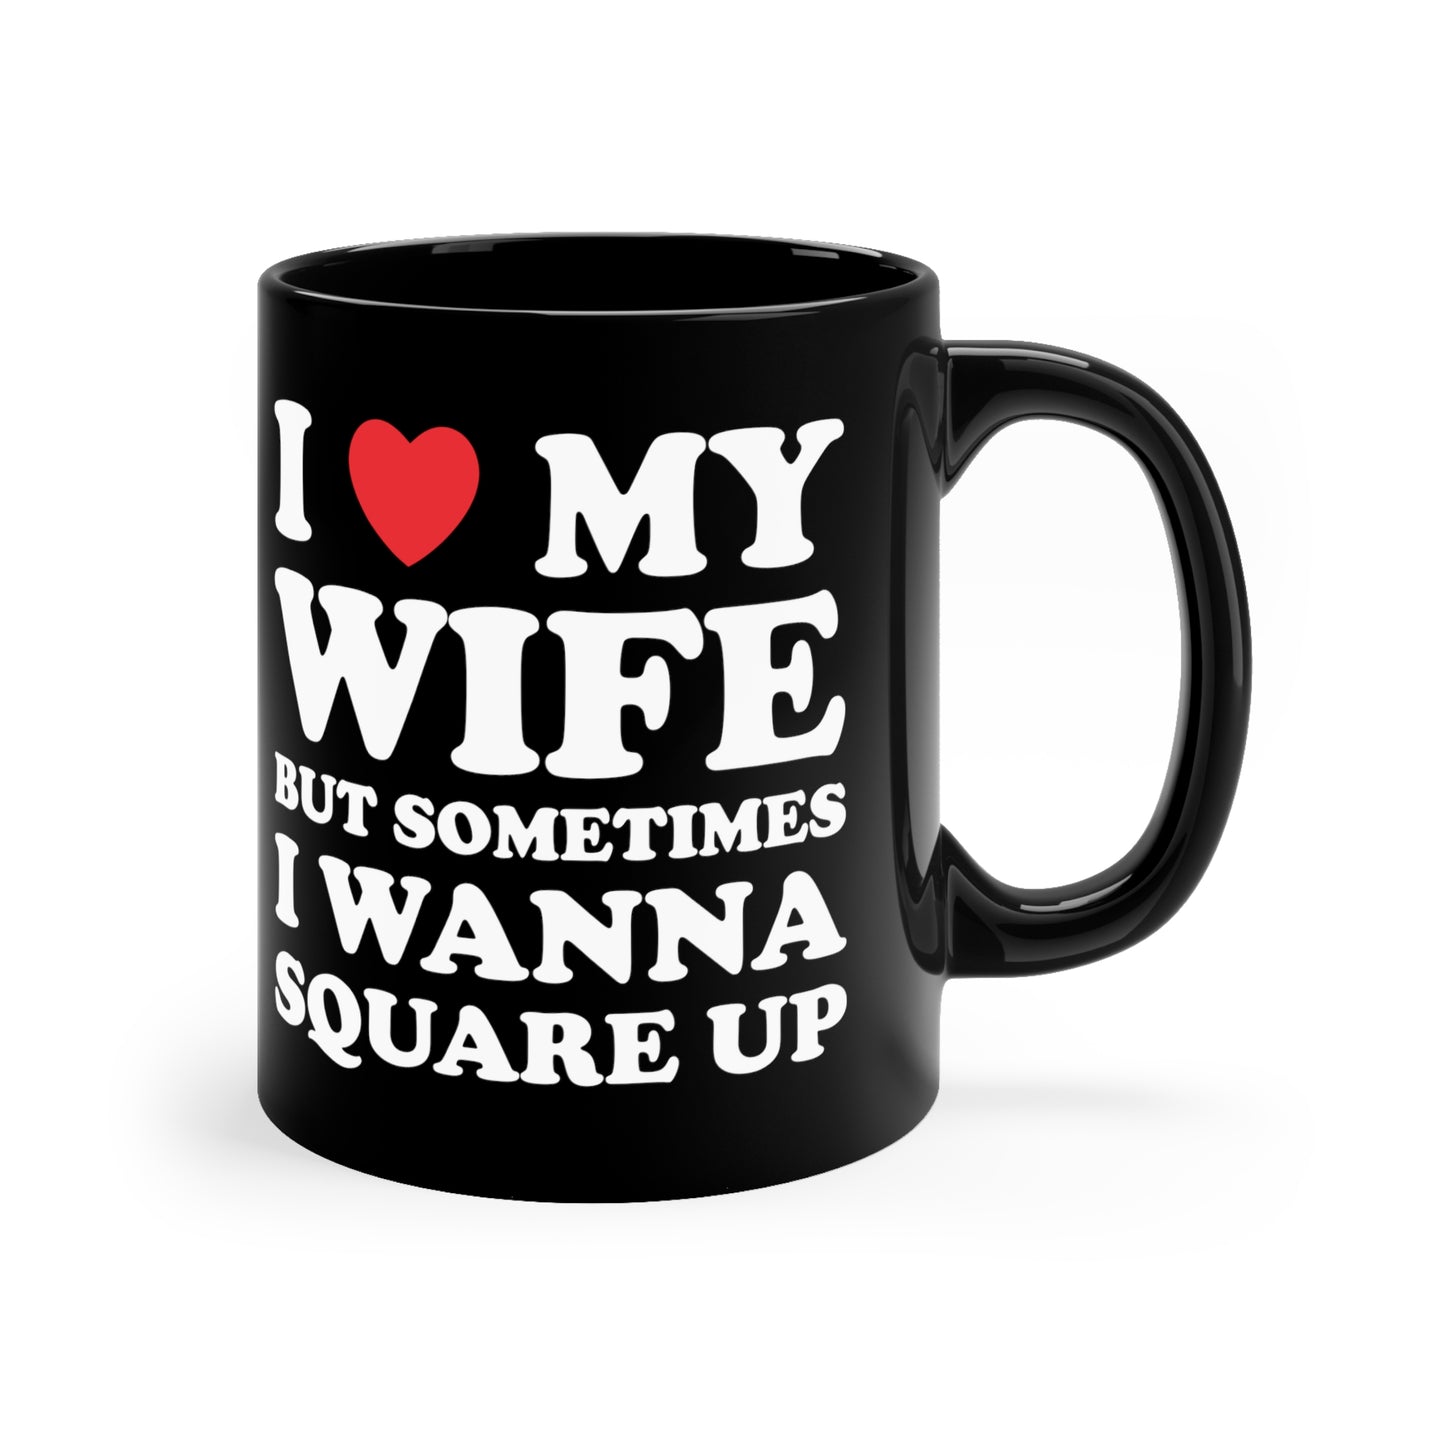 I Love My Wife But Sometimes I Want To Square Up 11oz Black Mug